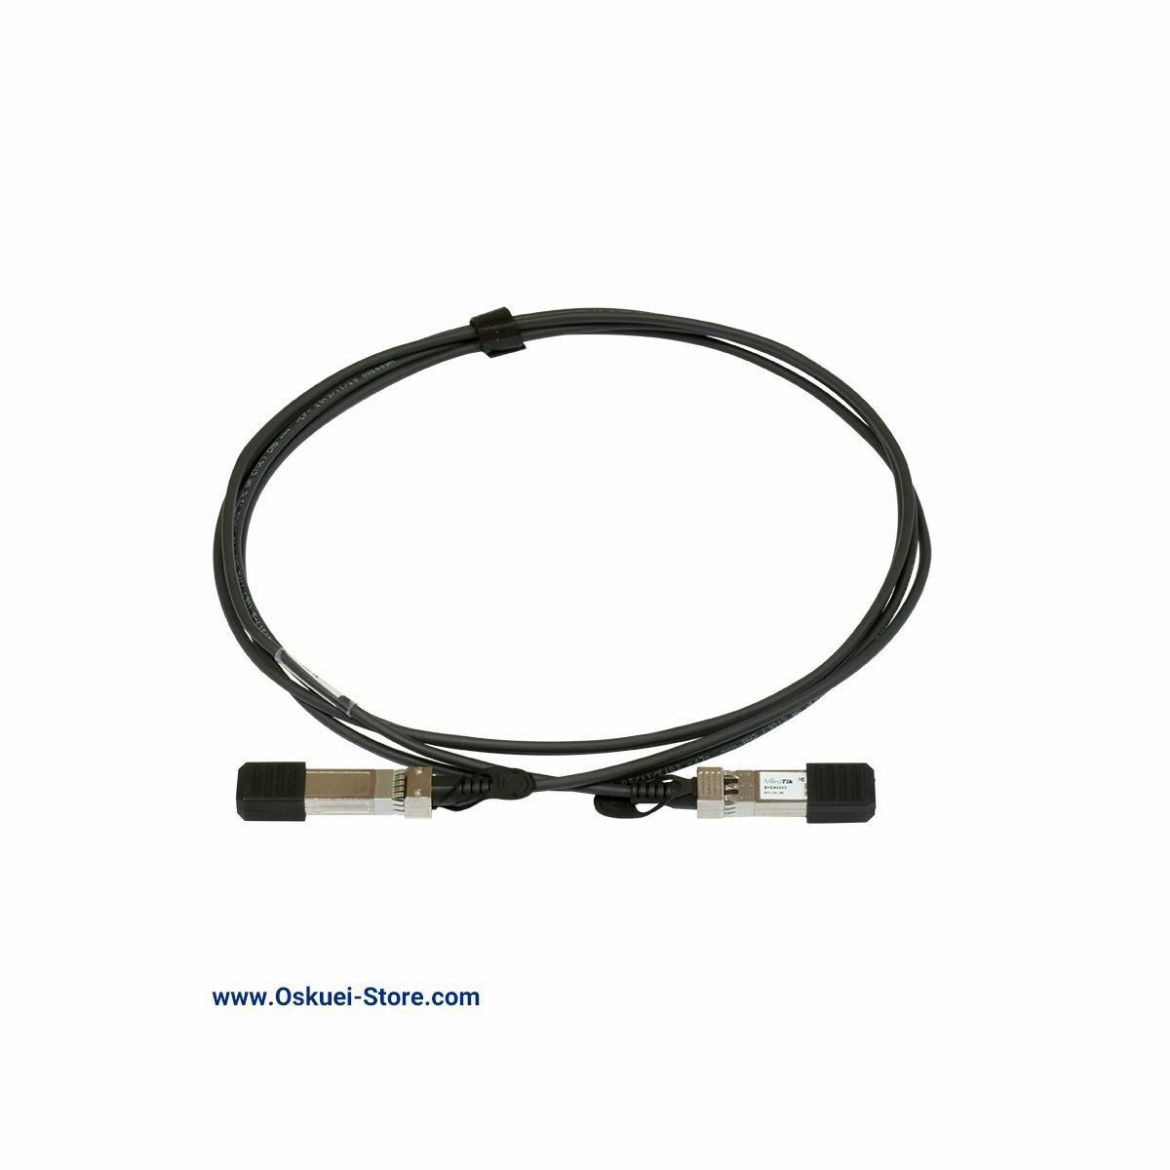 MikroTik S+DA0001 SFP Cable